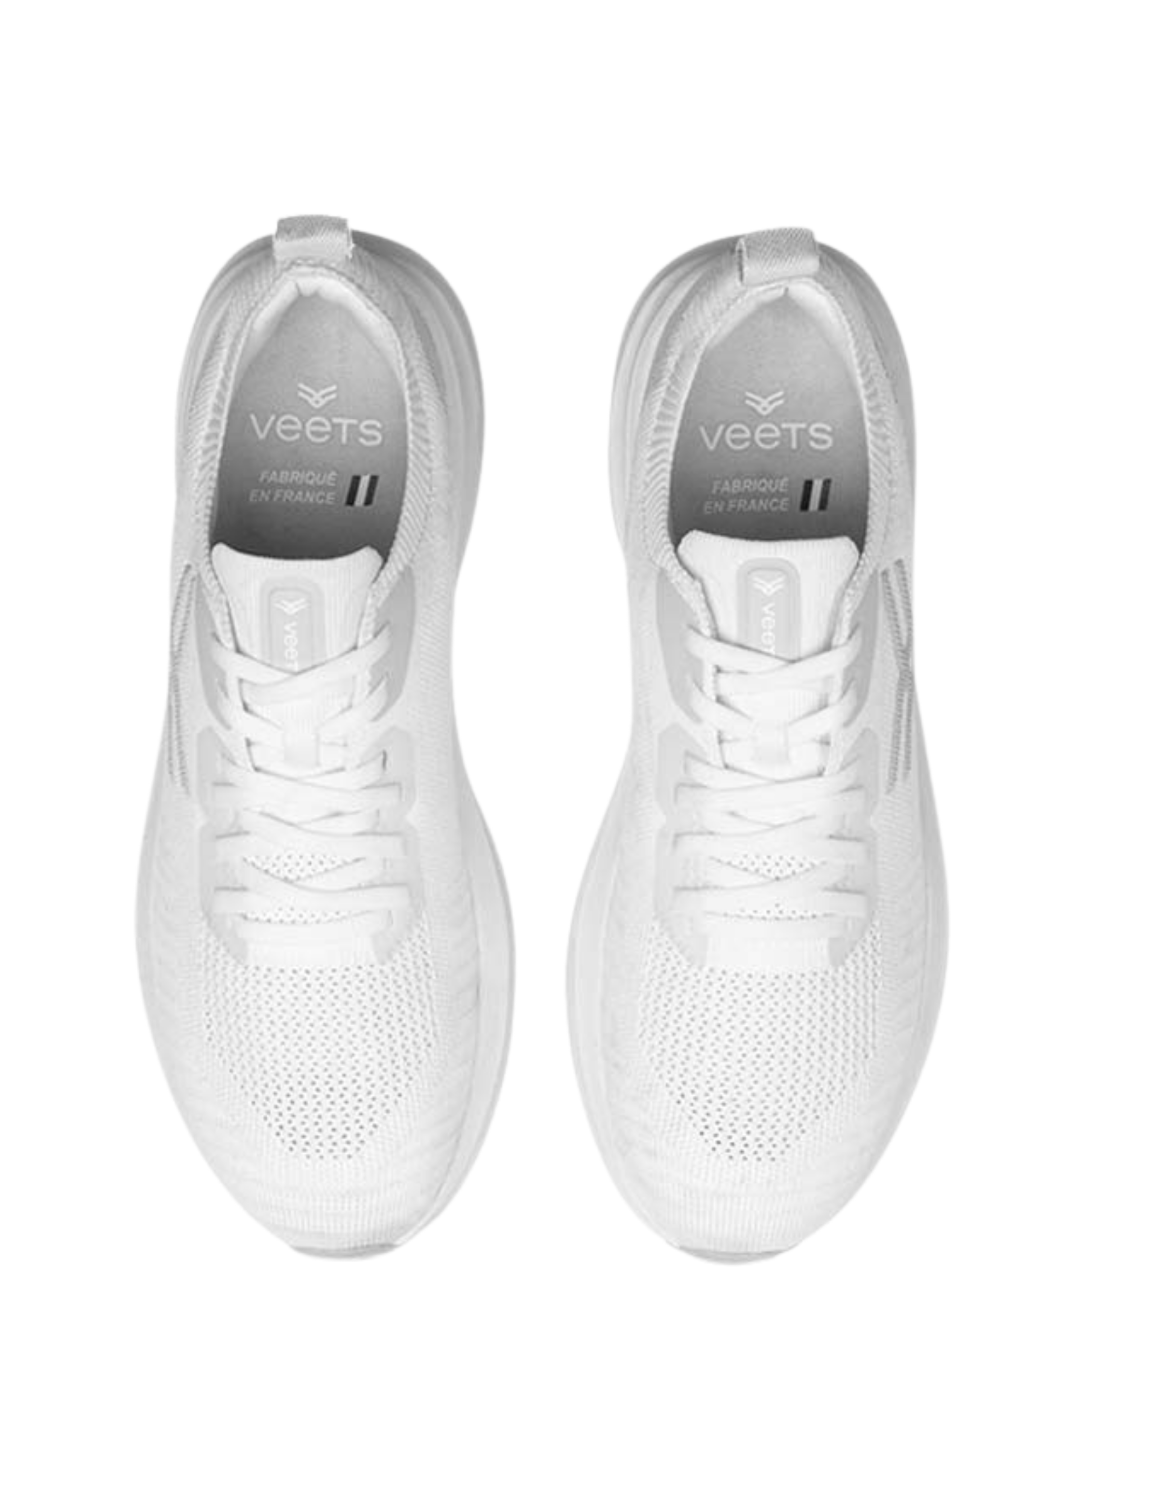 Chaussures de Running Veets Transition Knit Mif 1 Unisexe Blanc, vue dessus